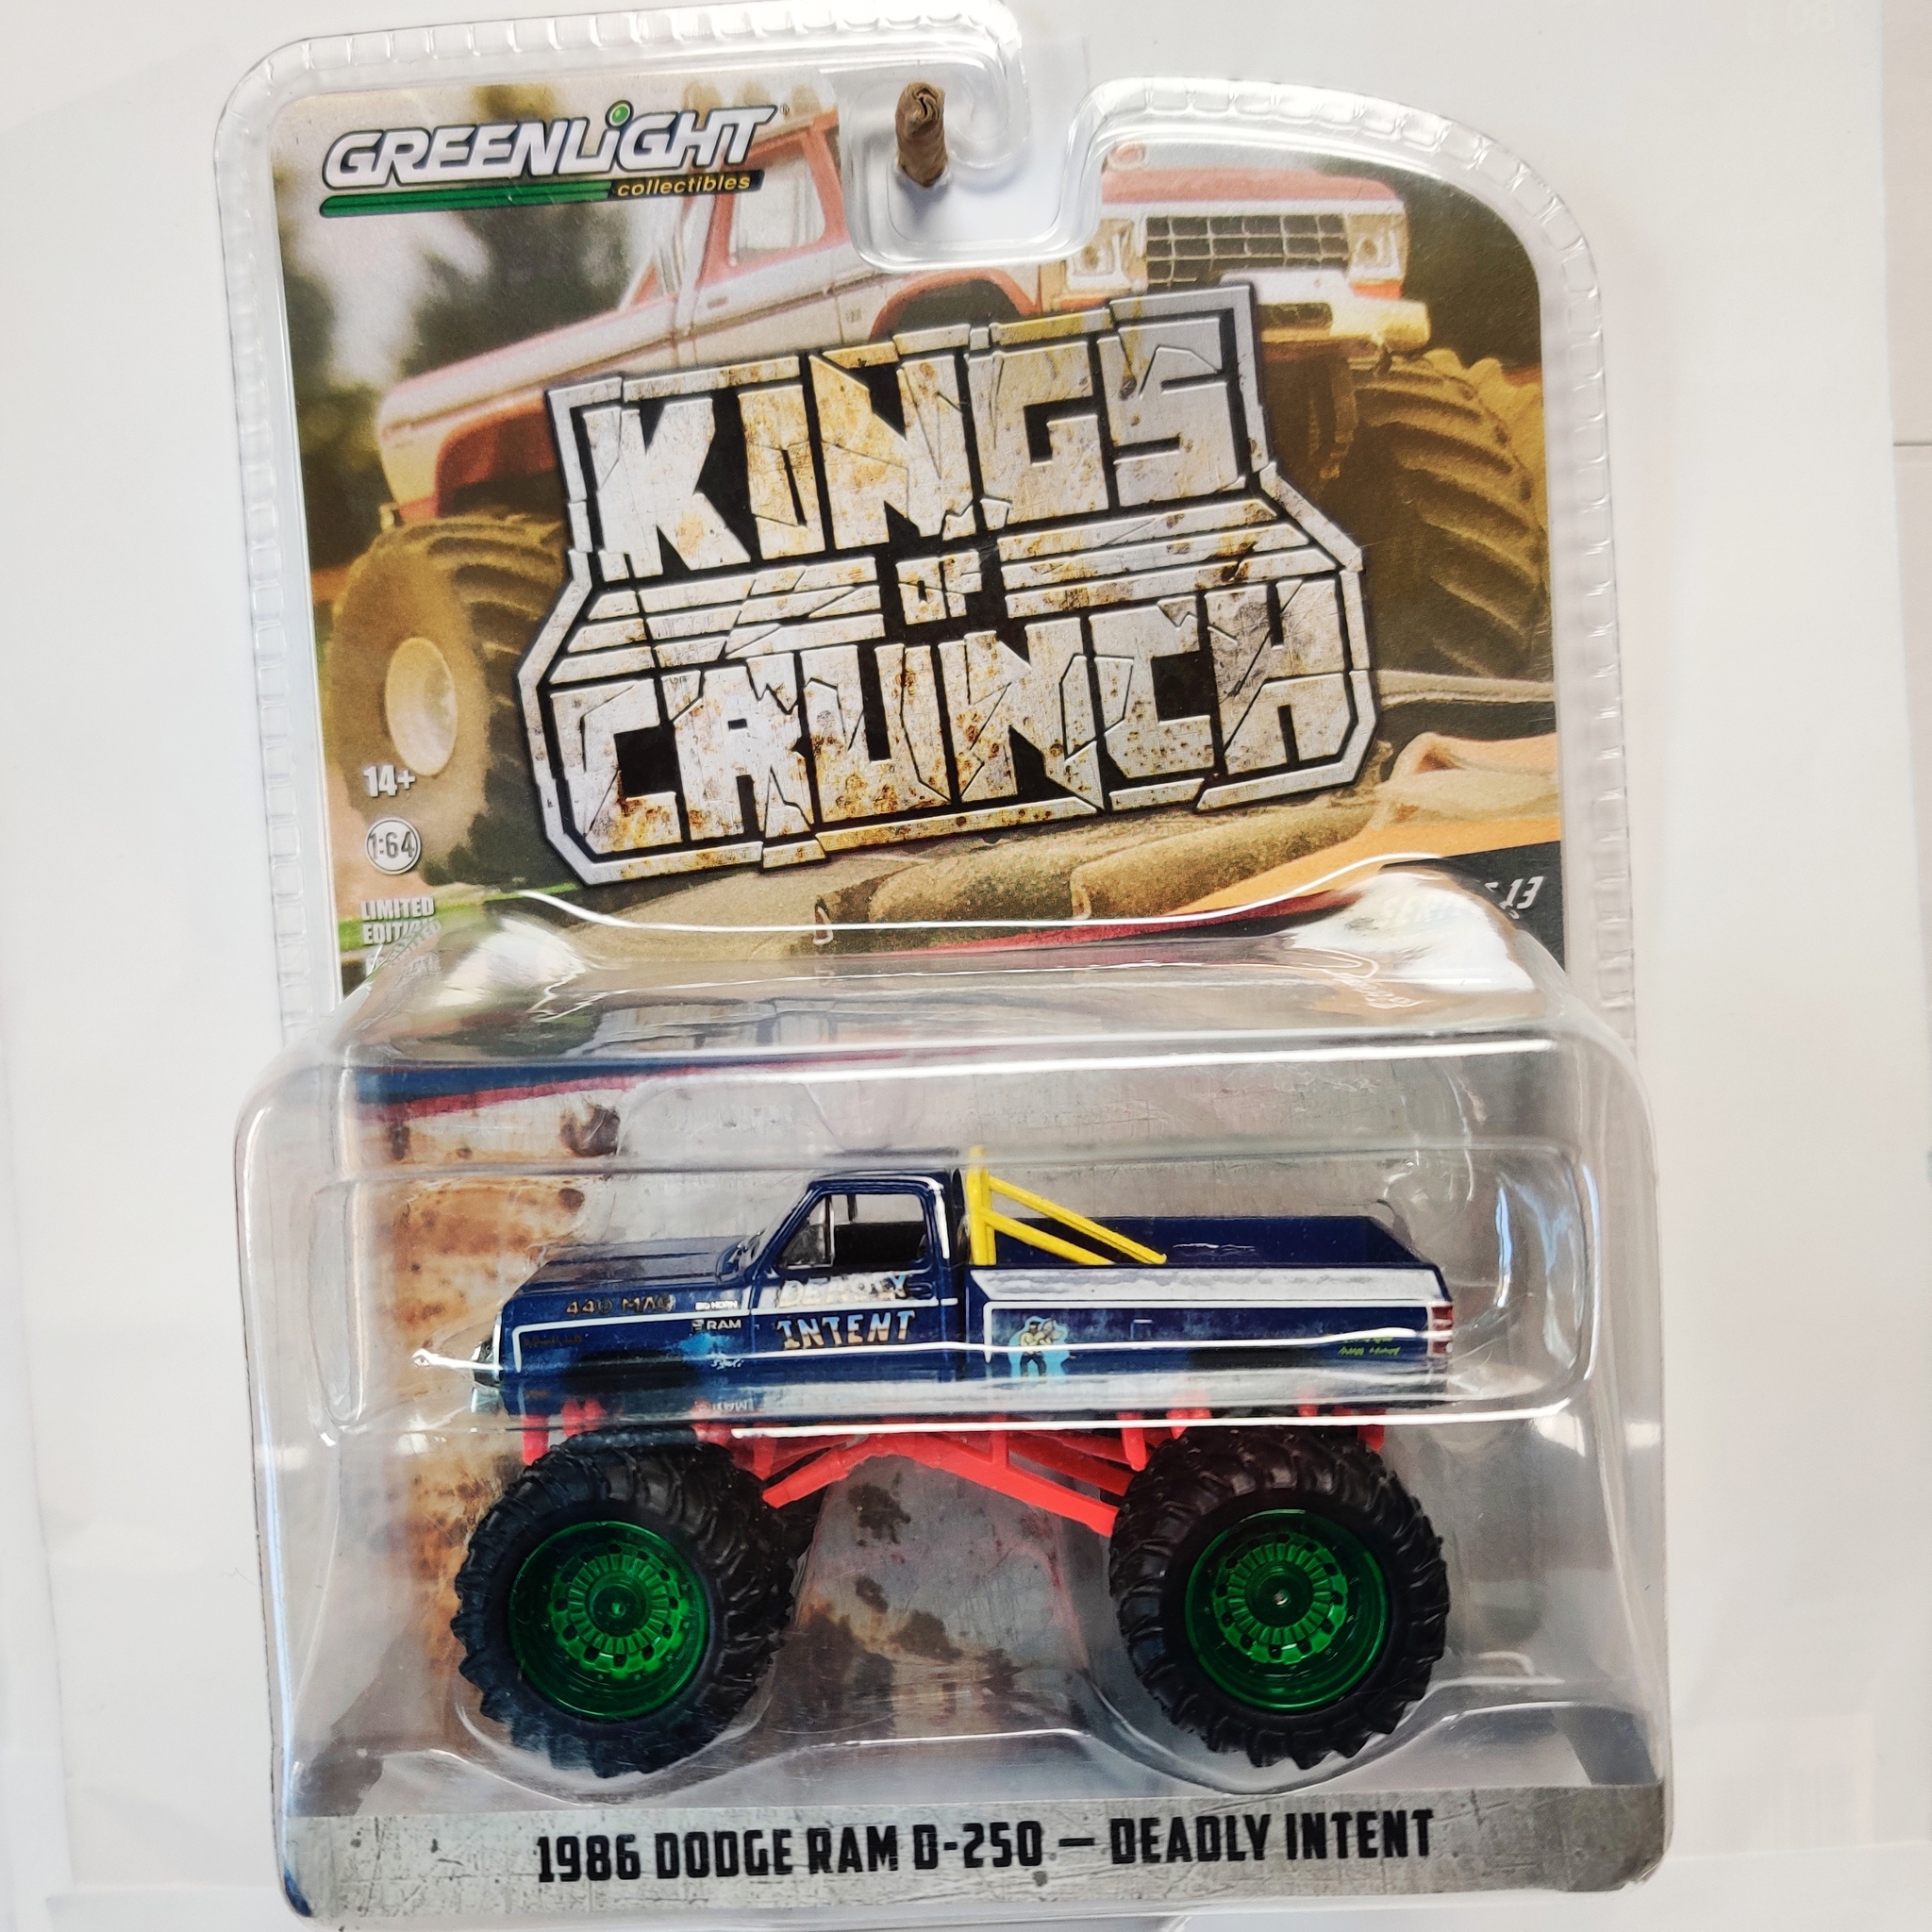 Skala 1/64 Greenlight "Kings of Crunch" 1986 Dodge Ram D-250 - Deadly Intent,  Green.Ed